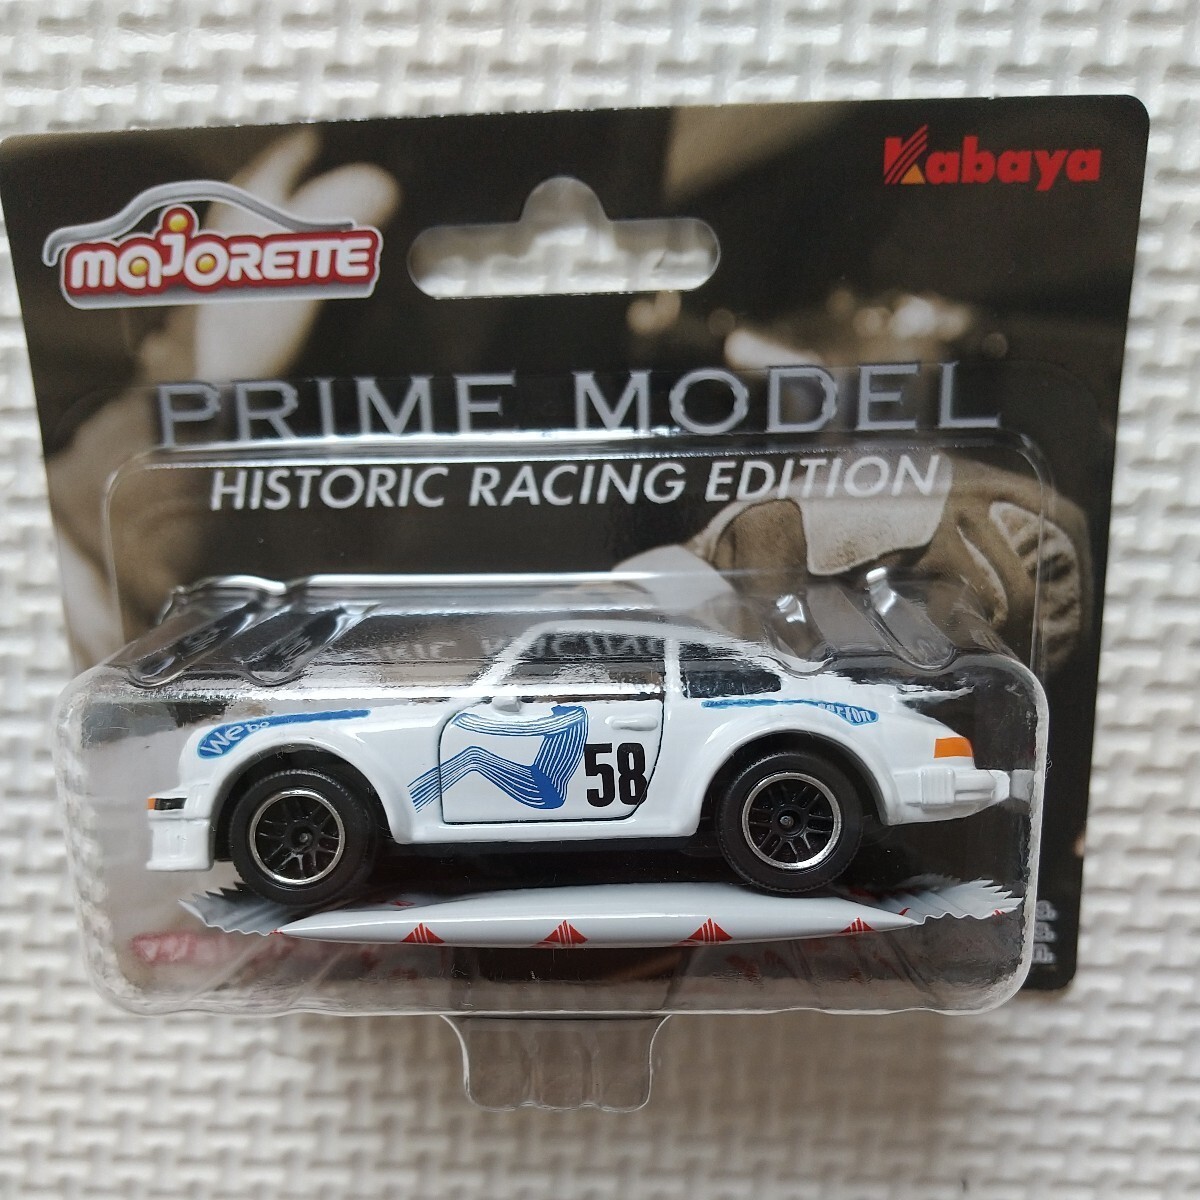  MajoRette minicar prime model his Trick racing edition Porsche 934 Burton white 